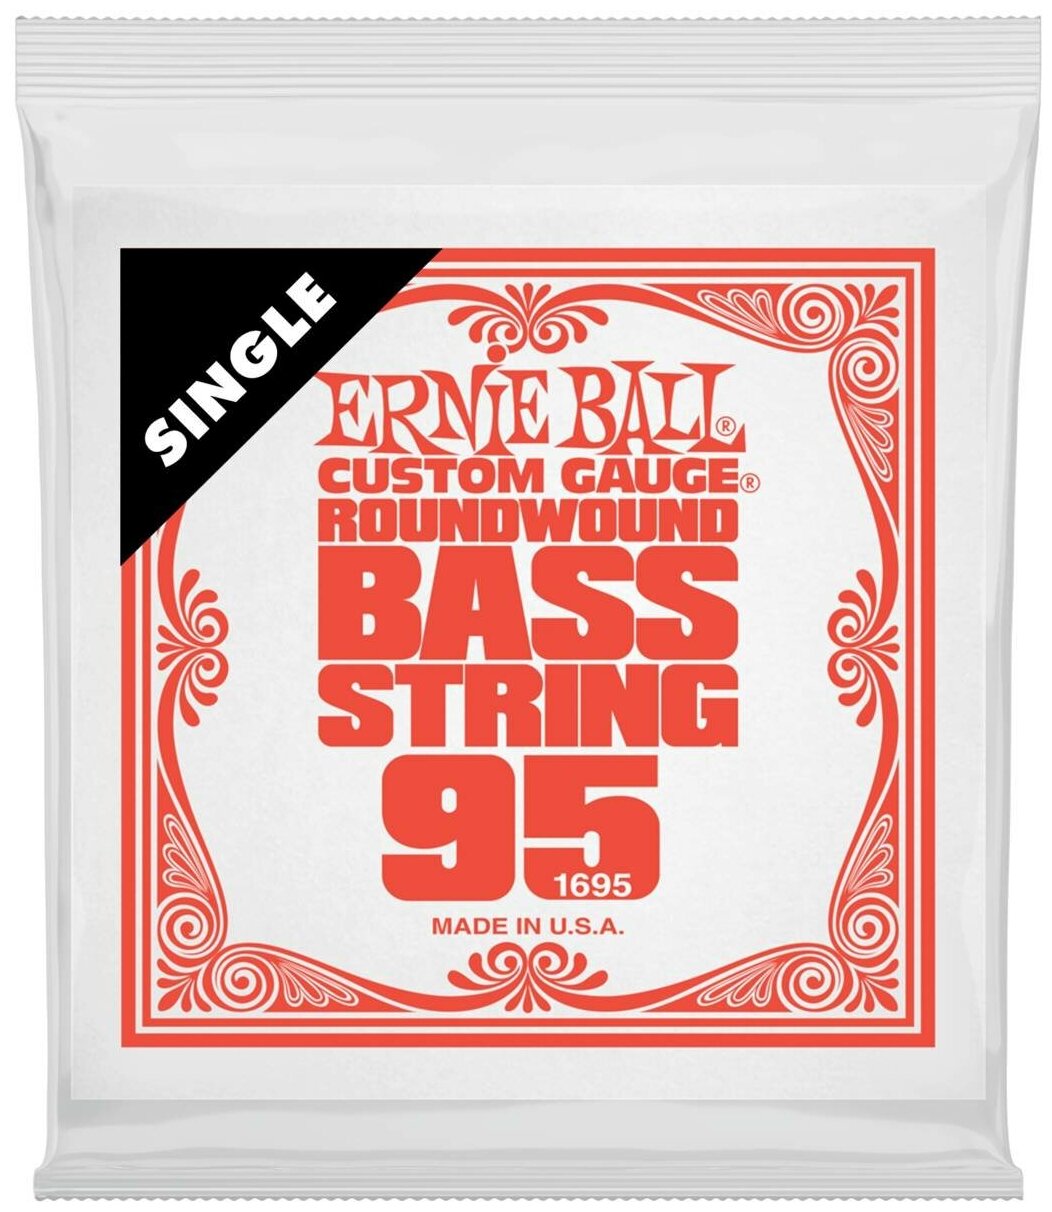 Ernie Ball 1695 струна для бас гитар. Никель калибр .095